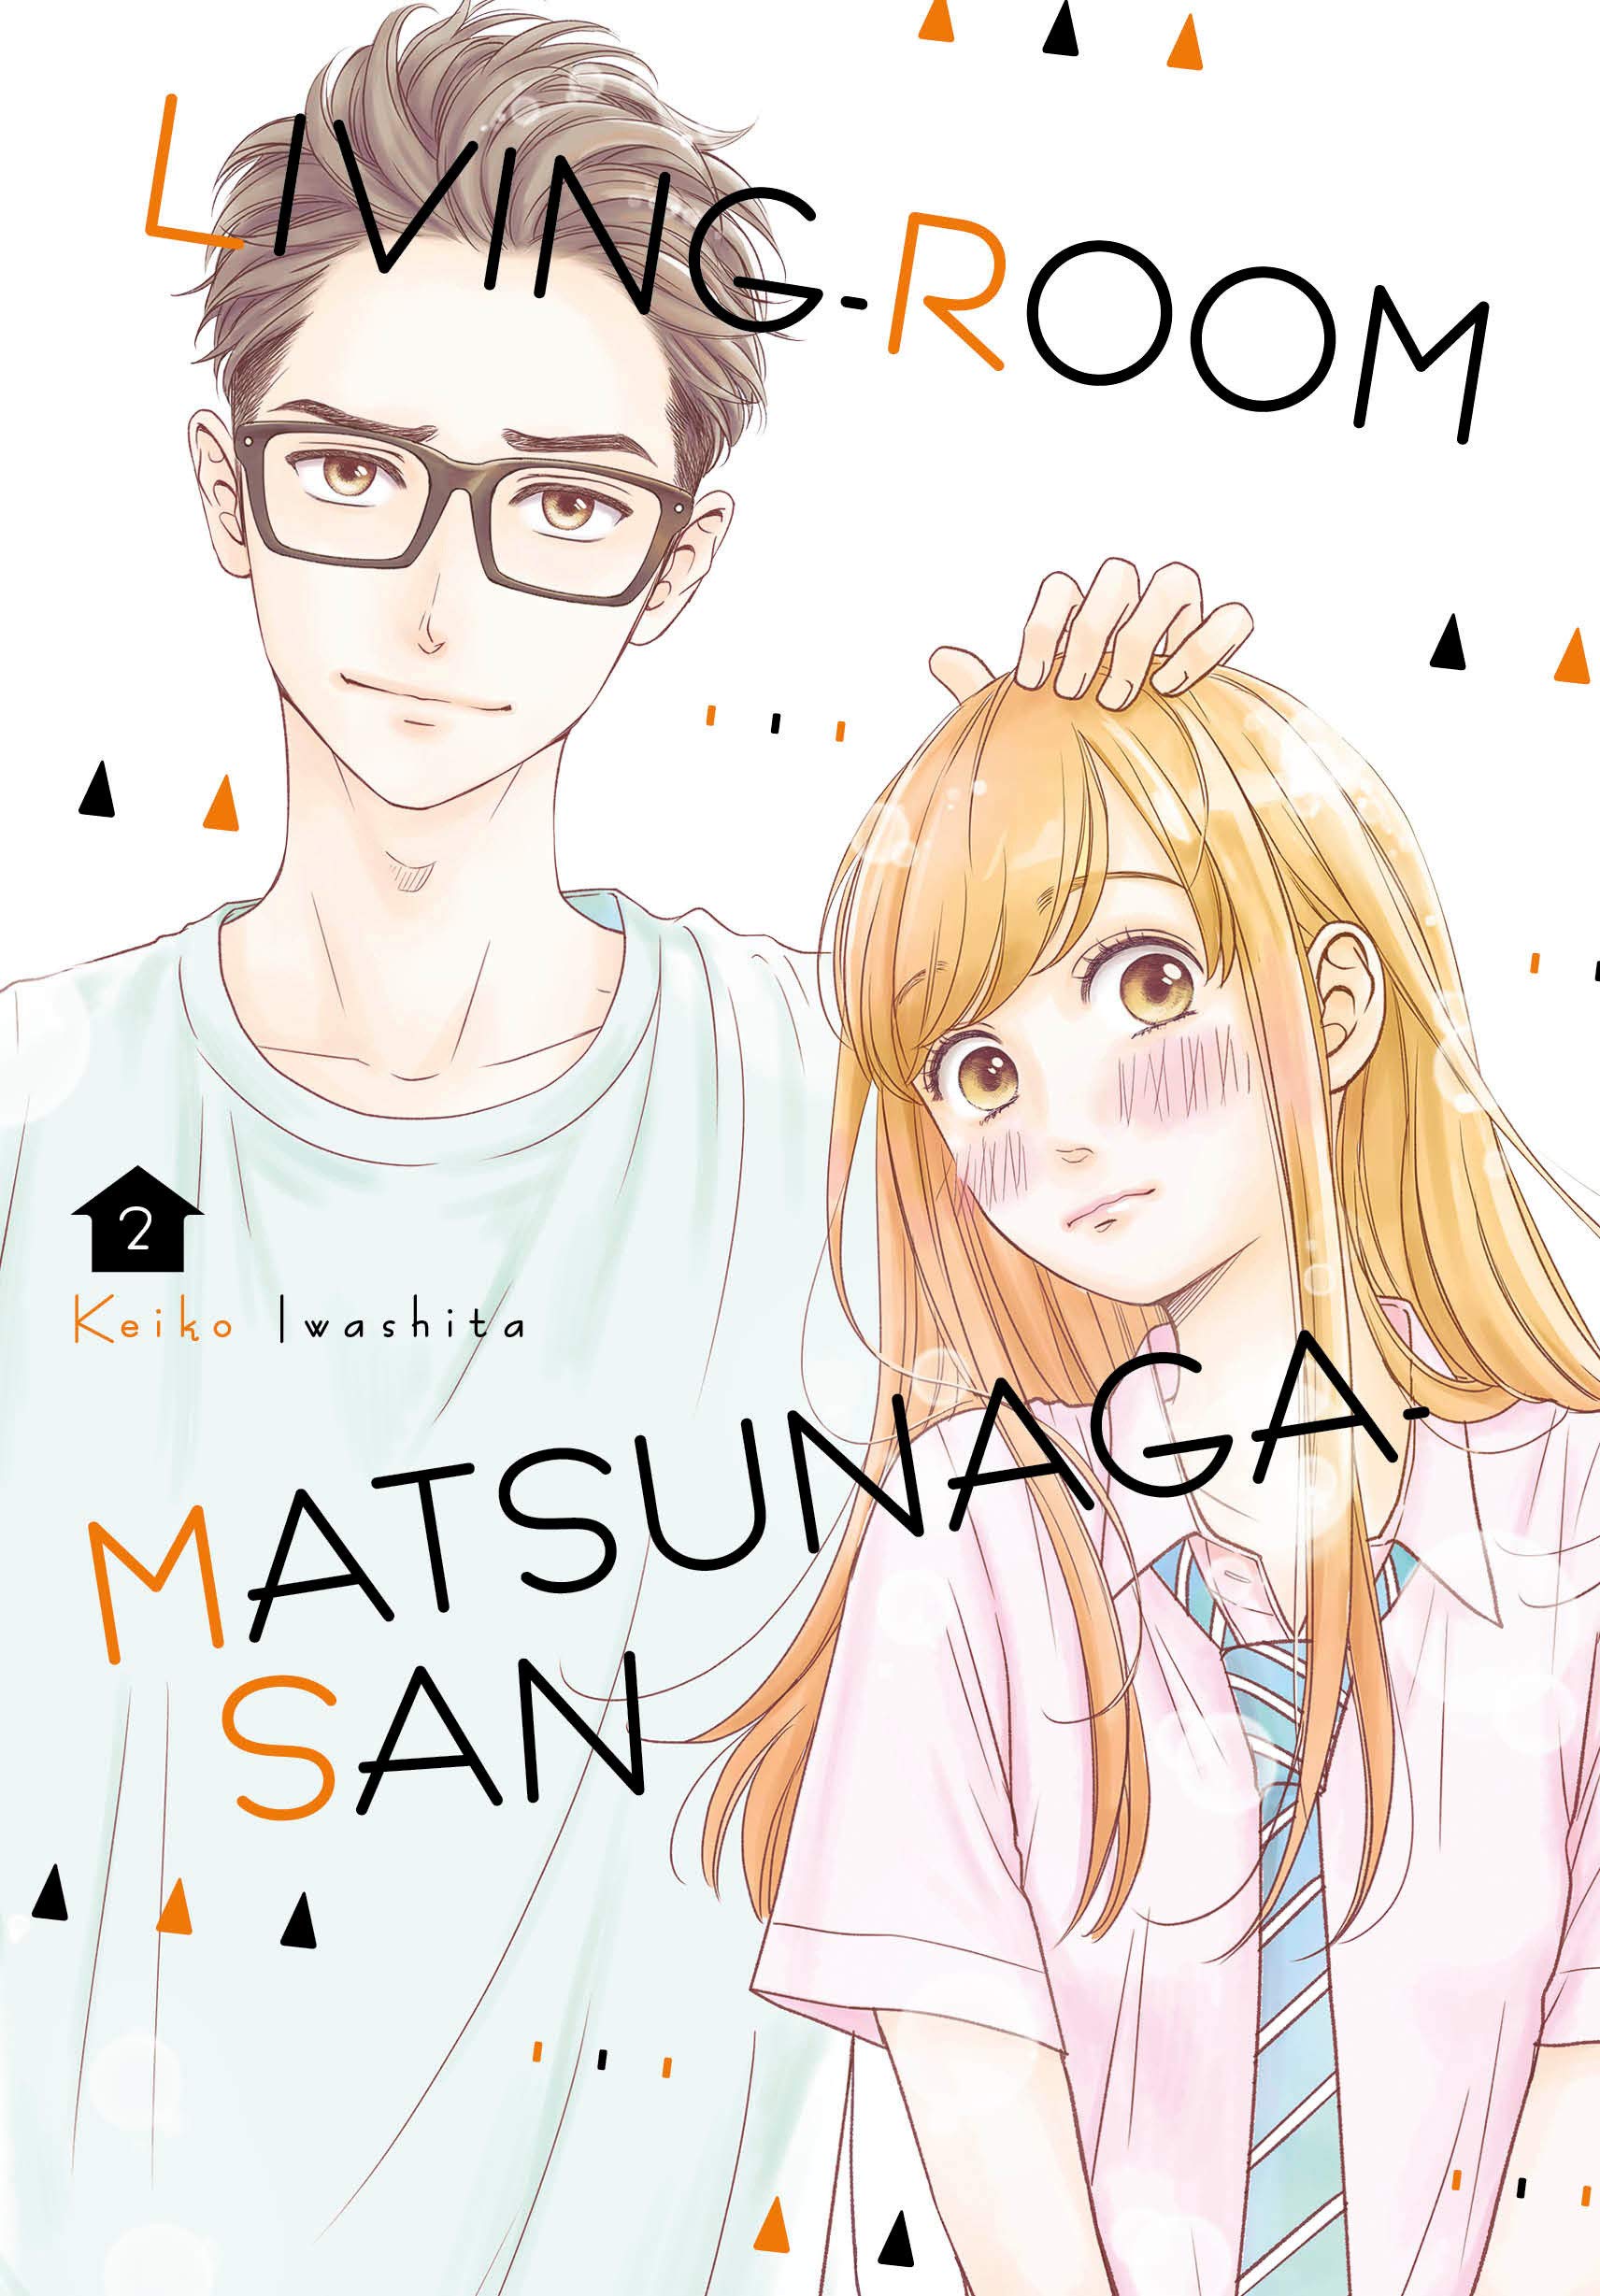 Living Room Matsunaga San Manga Volume 2